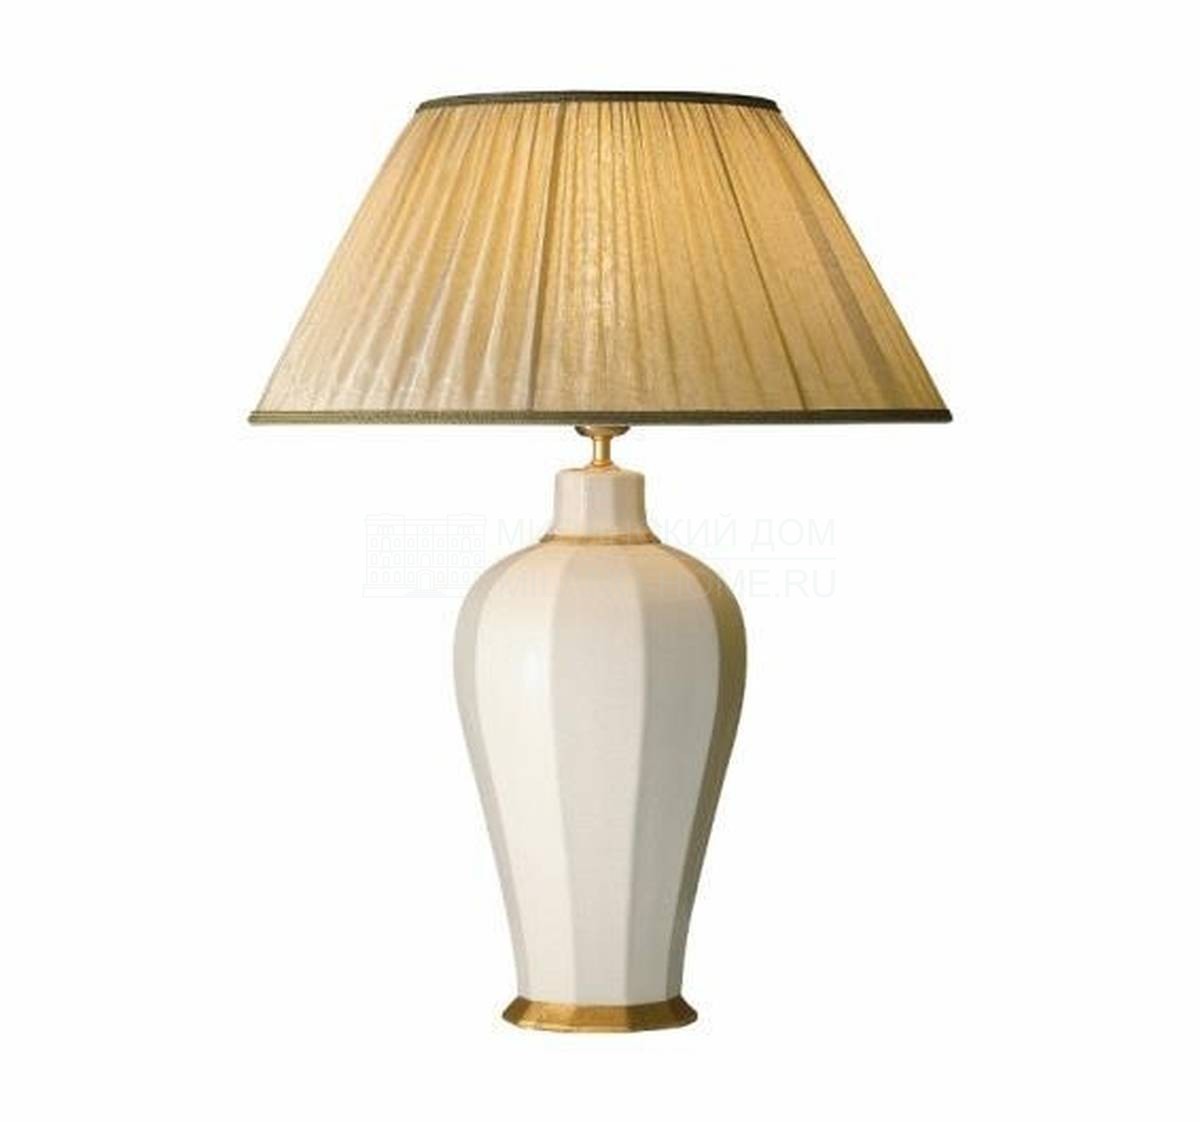 Настольная лампа Yang table lamp из Италии фабрики MARIONI